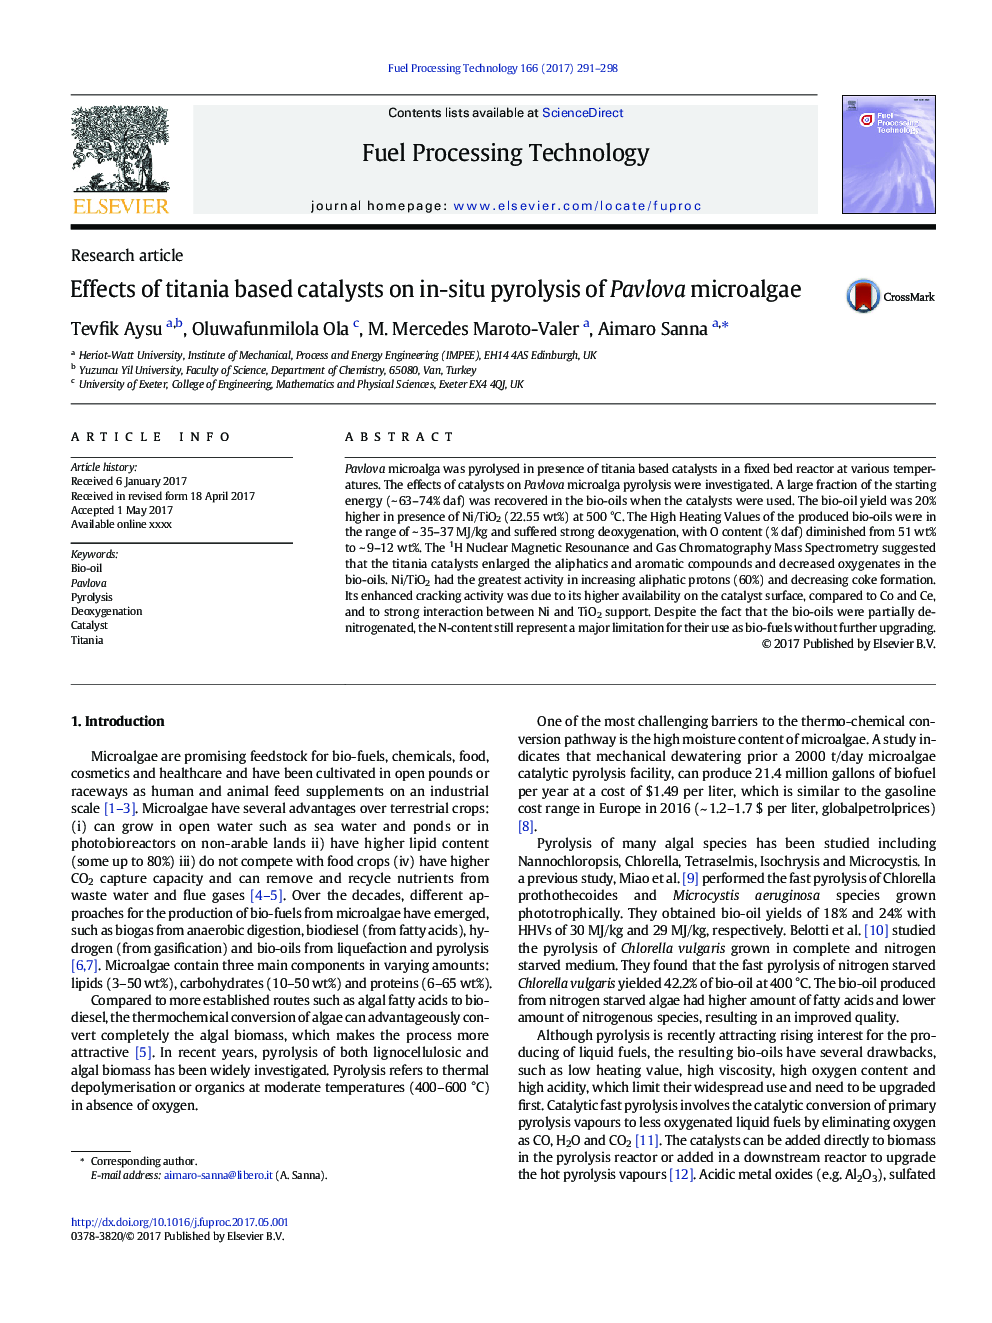 Effects of titania based catalysts on in-situ pyrolysis of Pavlova microalgae